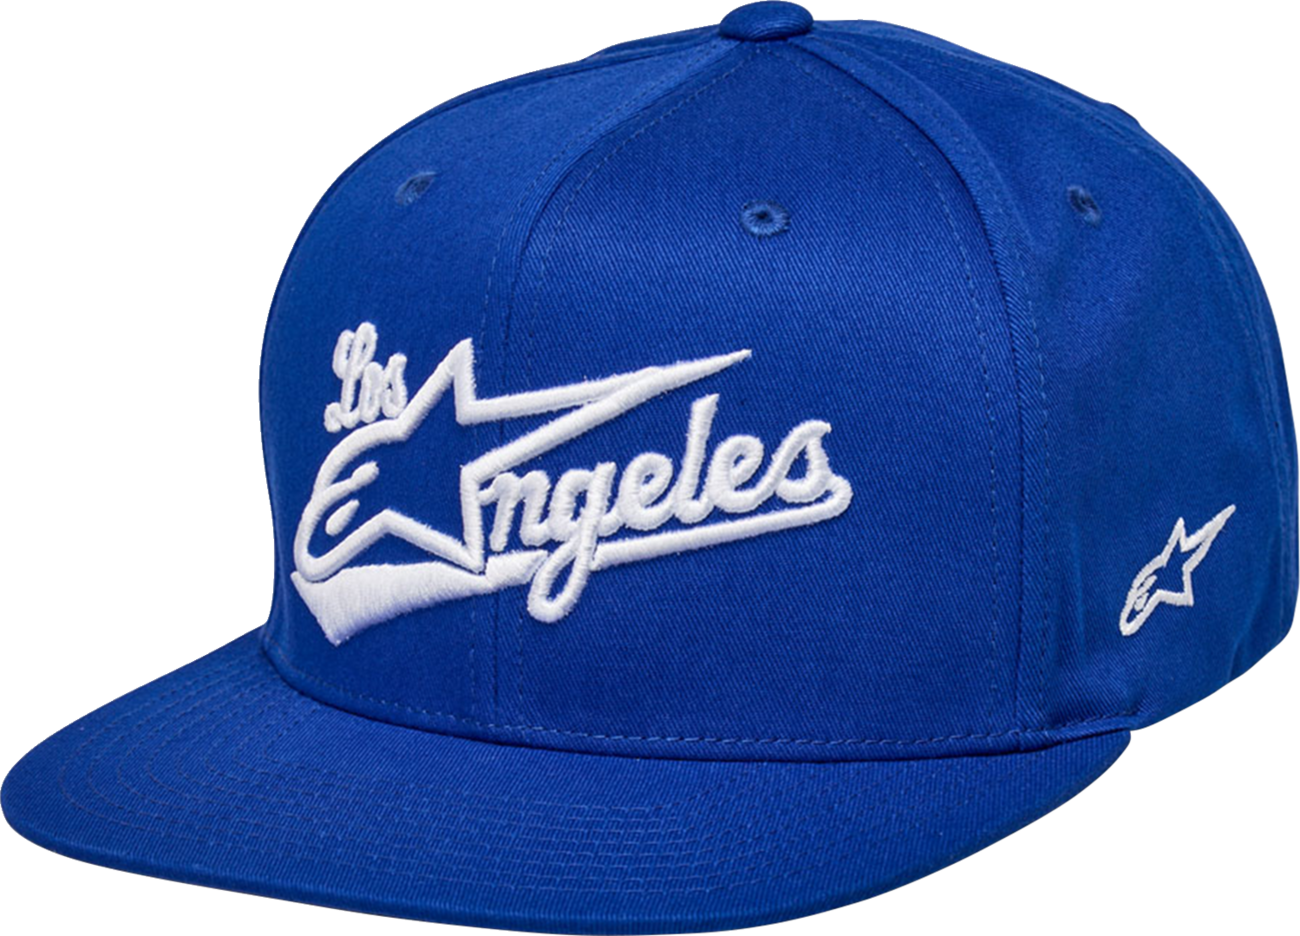 ALPINESTARS Los Angeles Hat - Blue/White - One Size 1233815707220OS